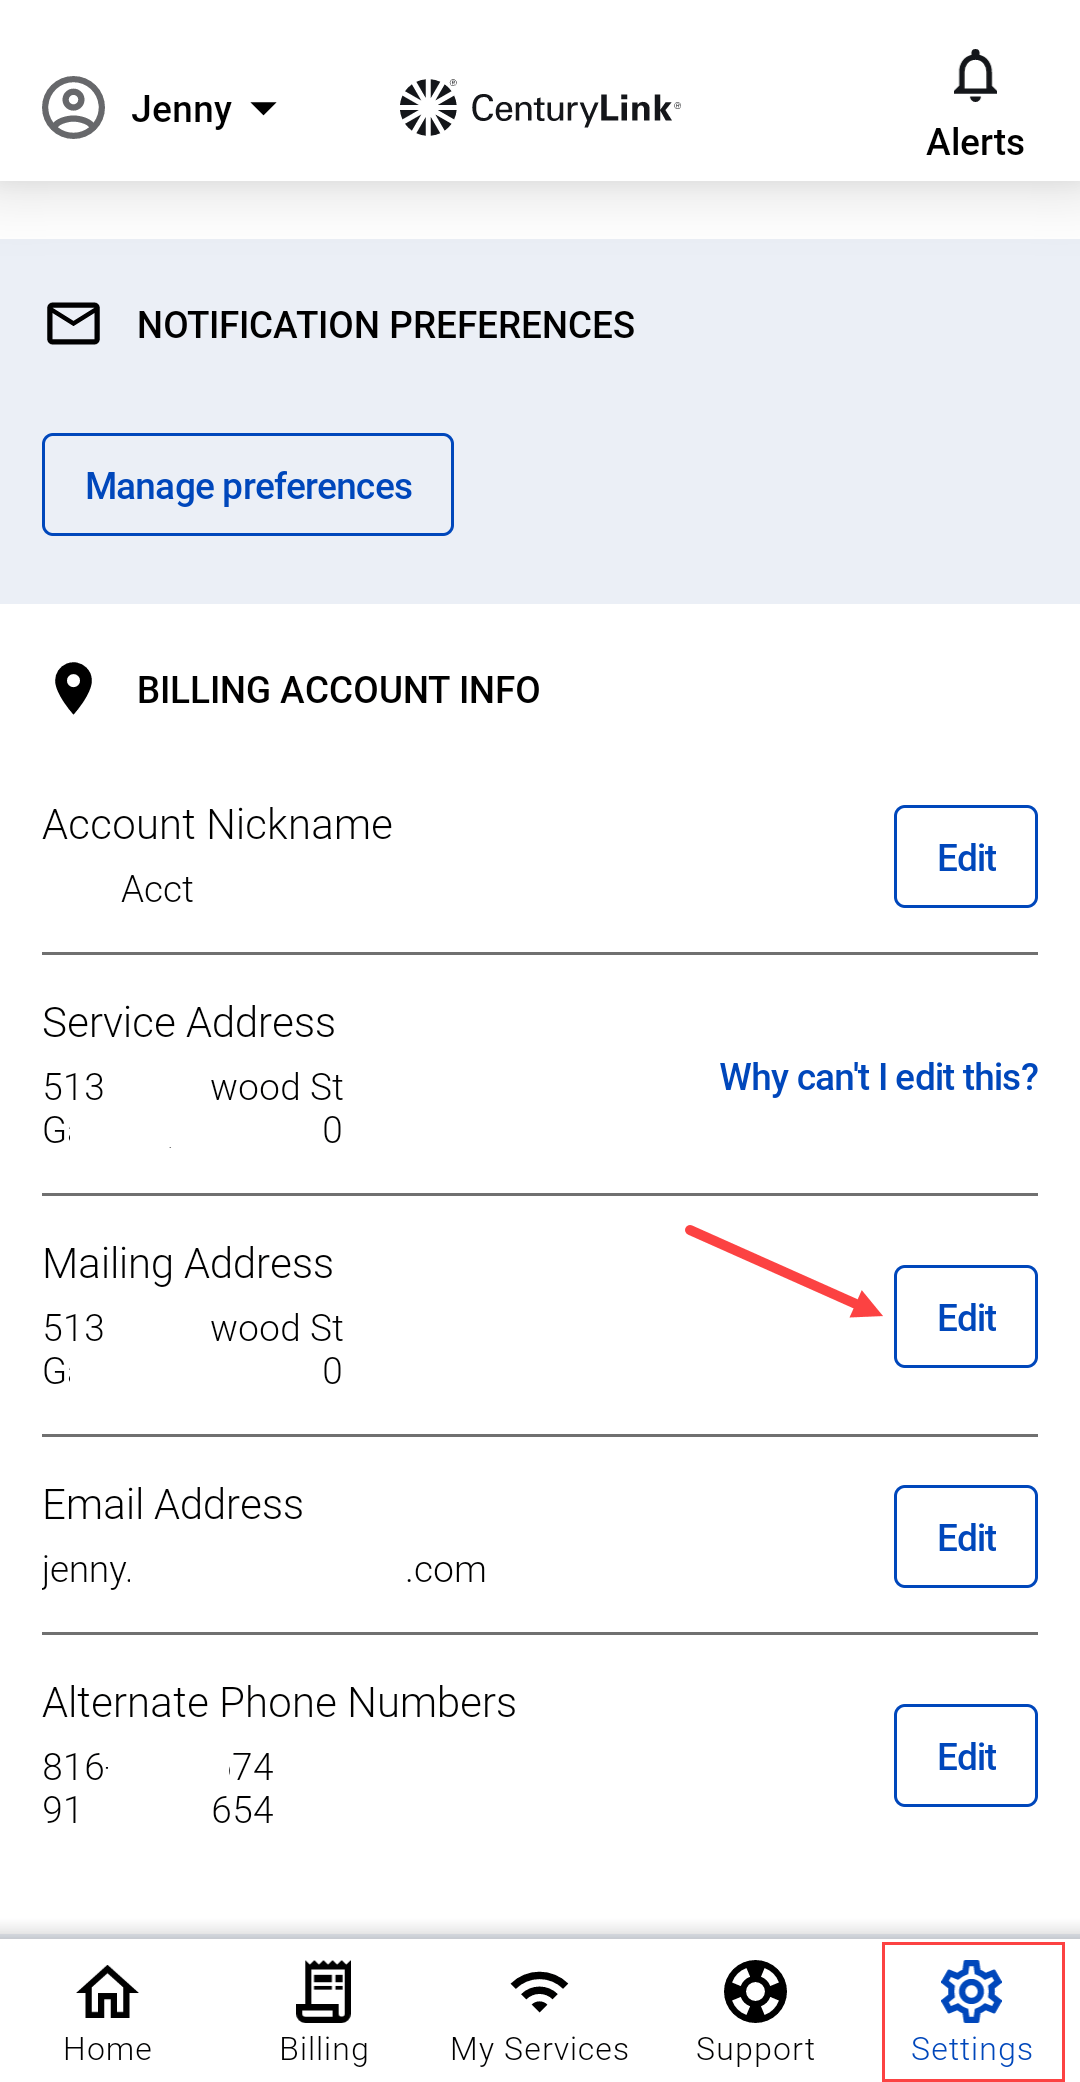 app screenshot-Billing Account Info